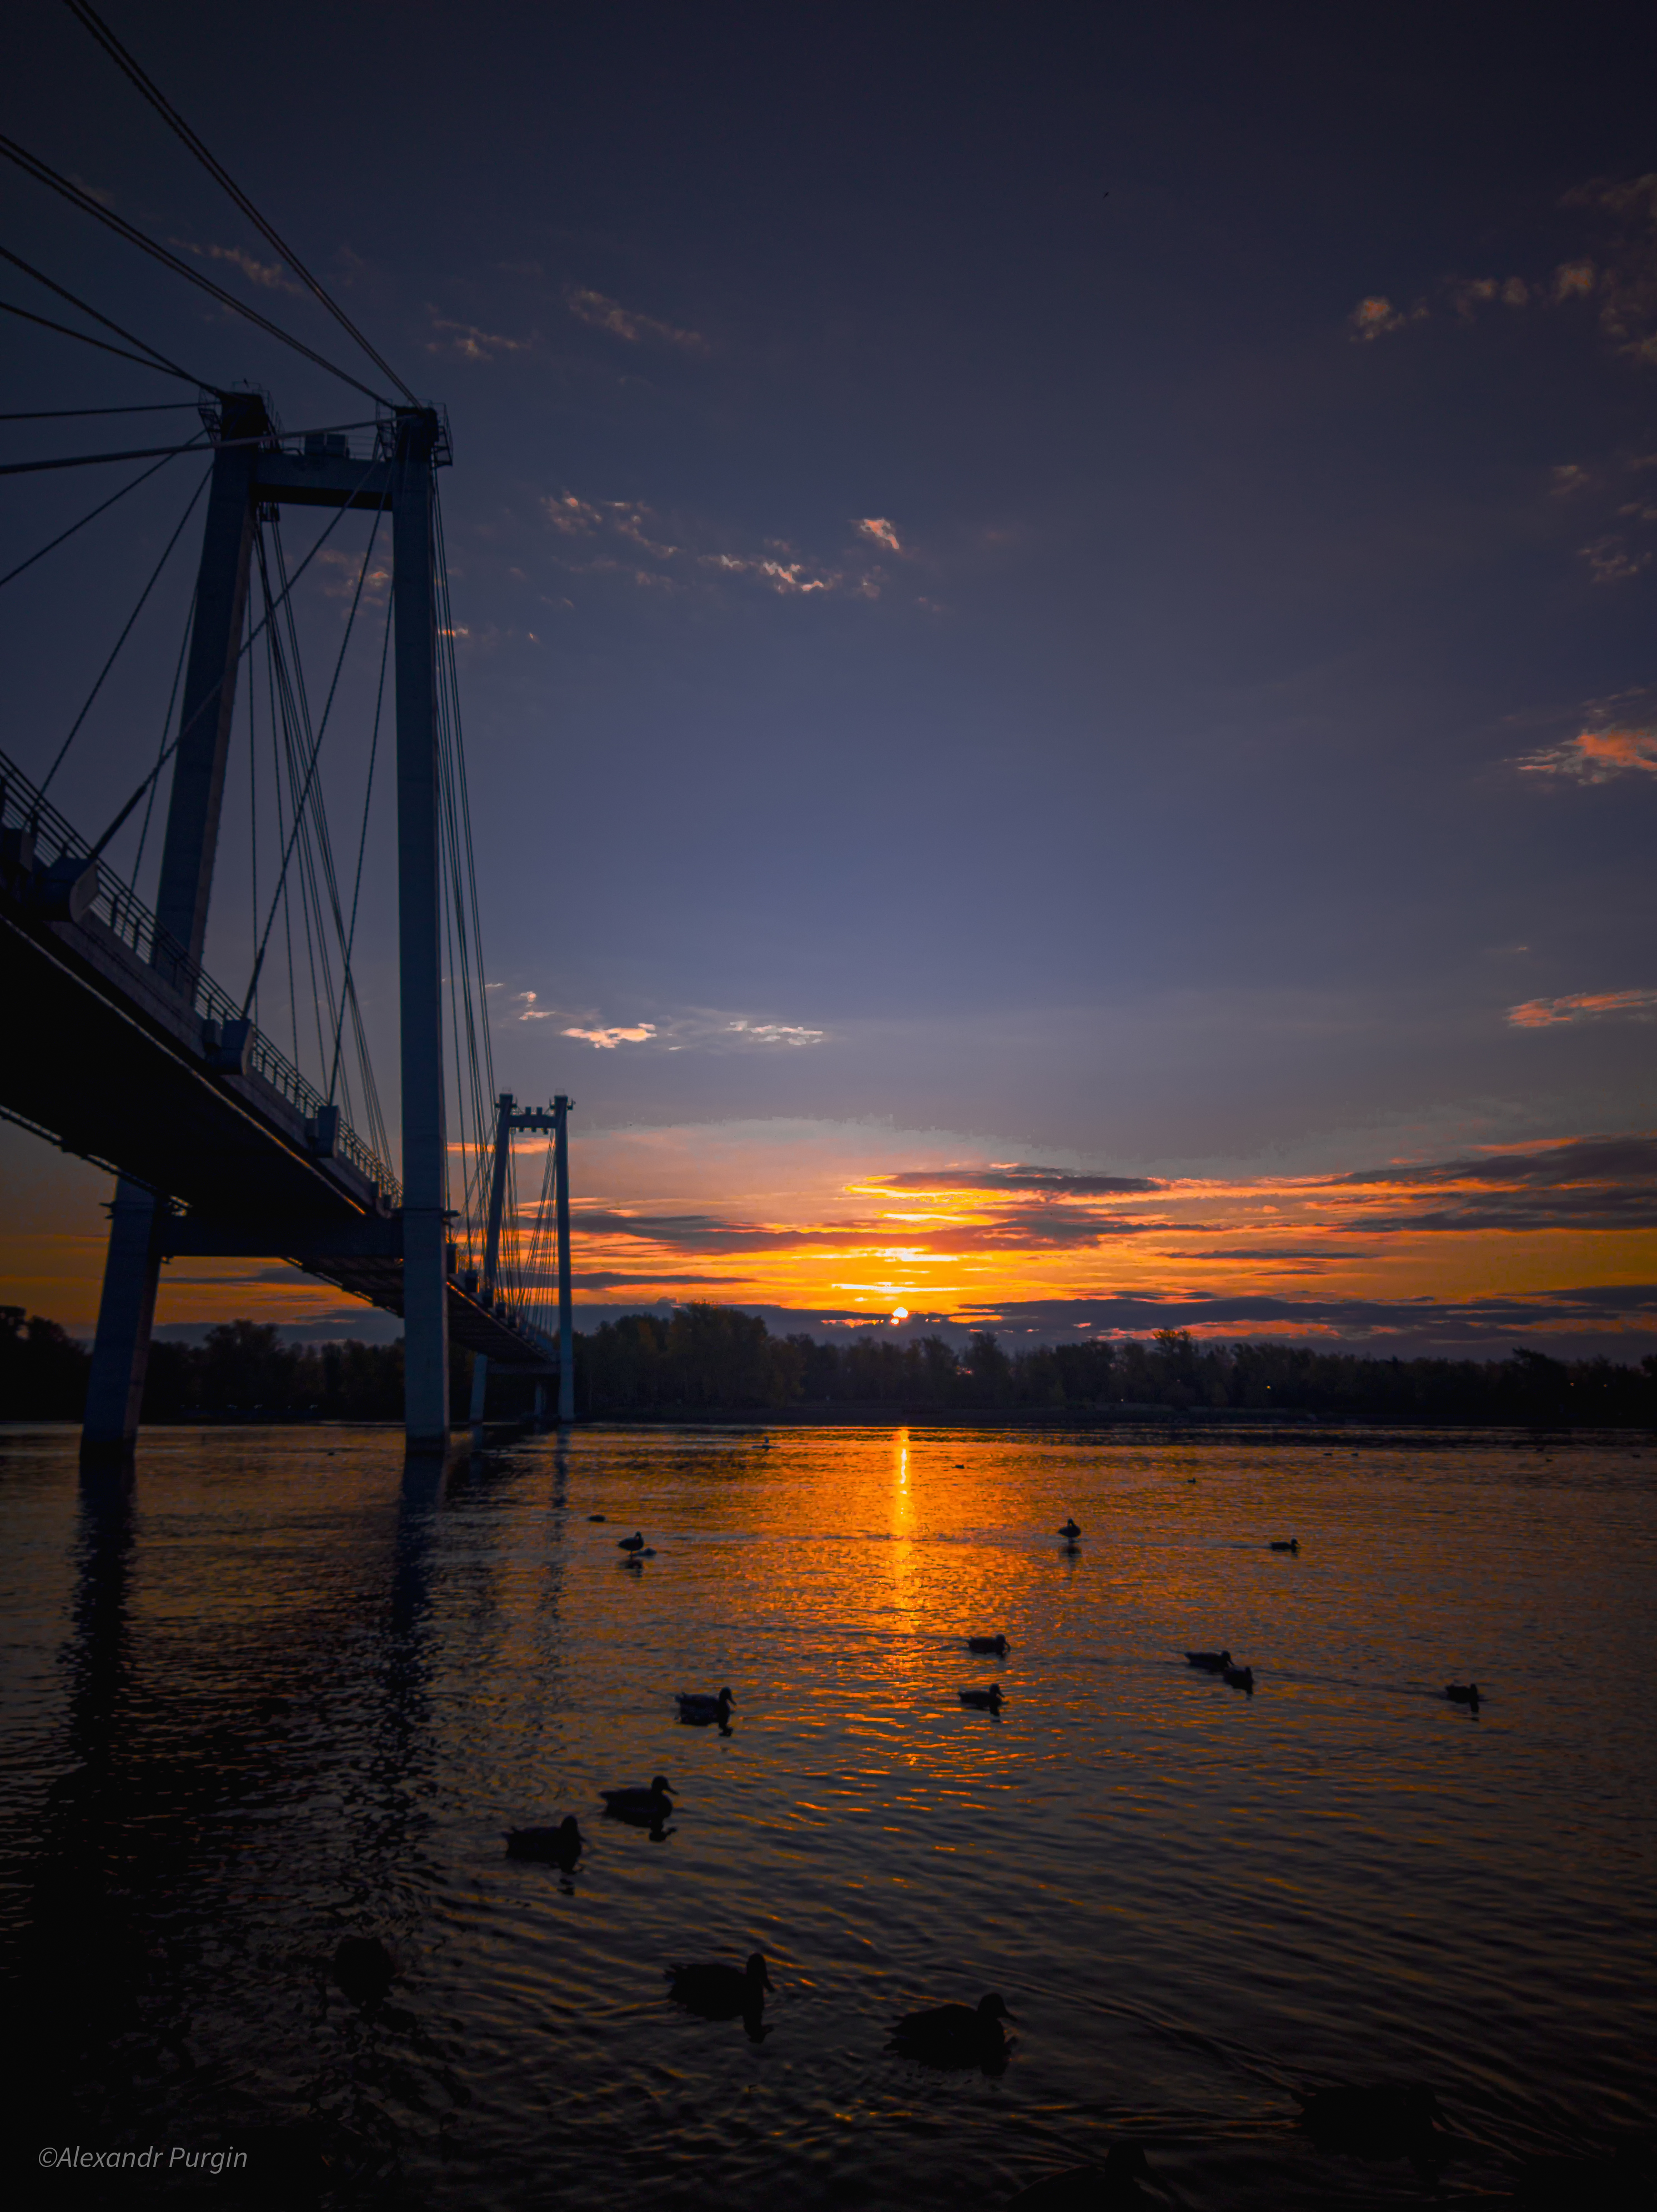 Бесплатное фото Восход солнца на реке с утками